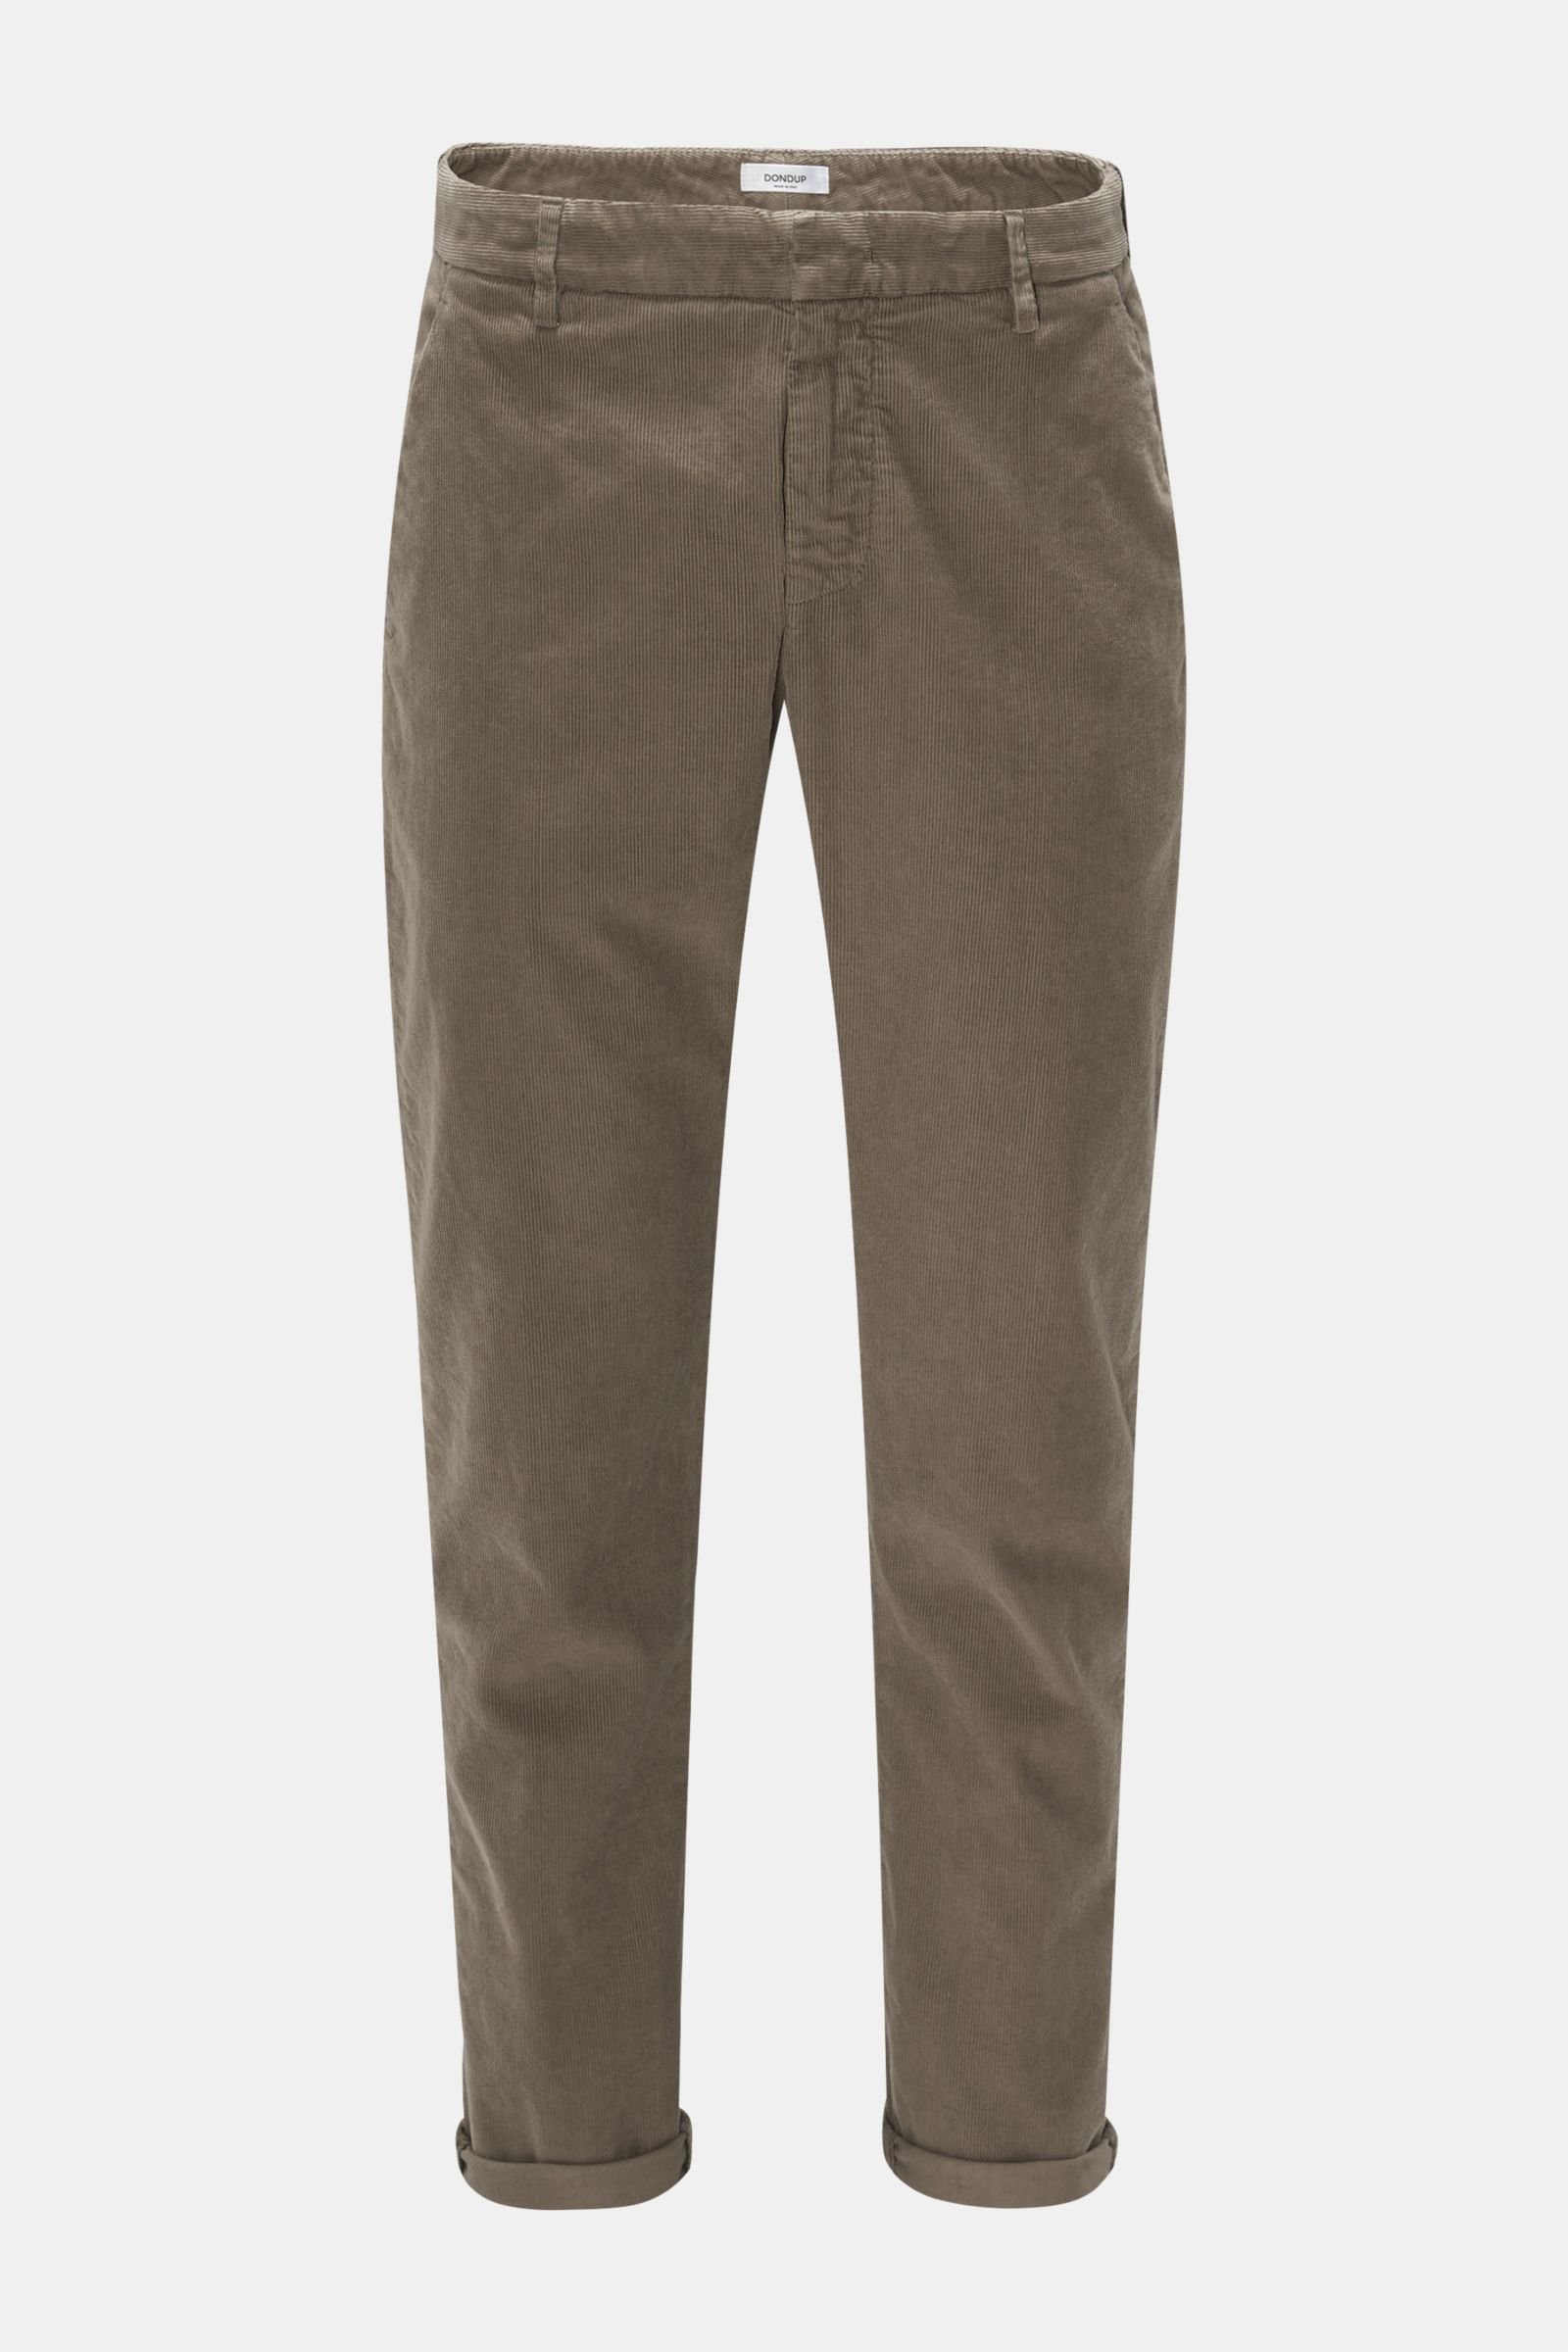 Corduroy trousers grey-brown